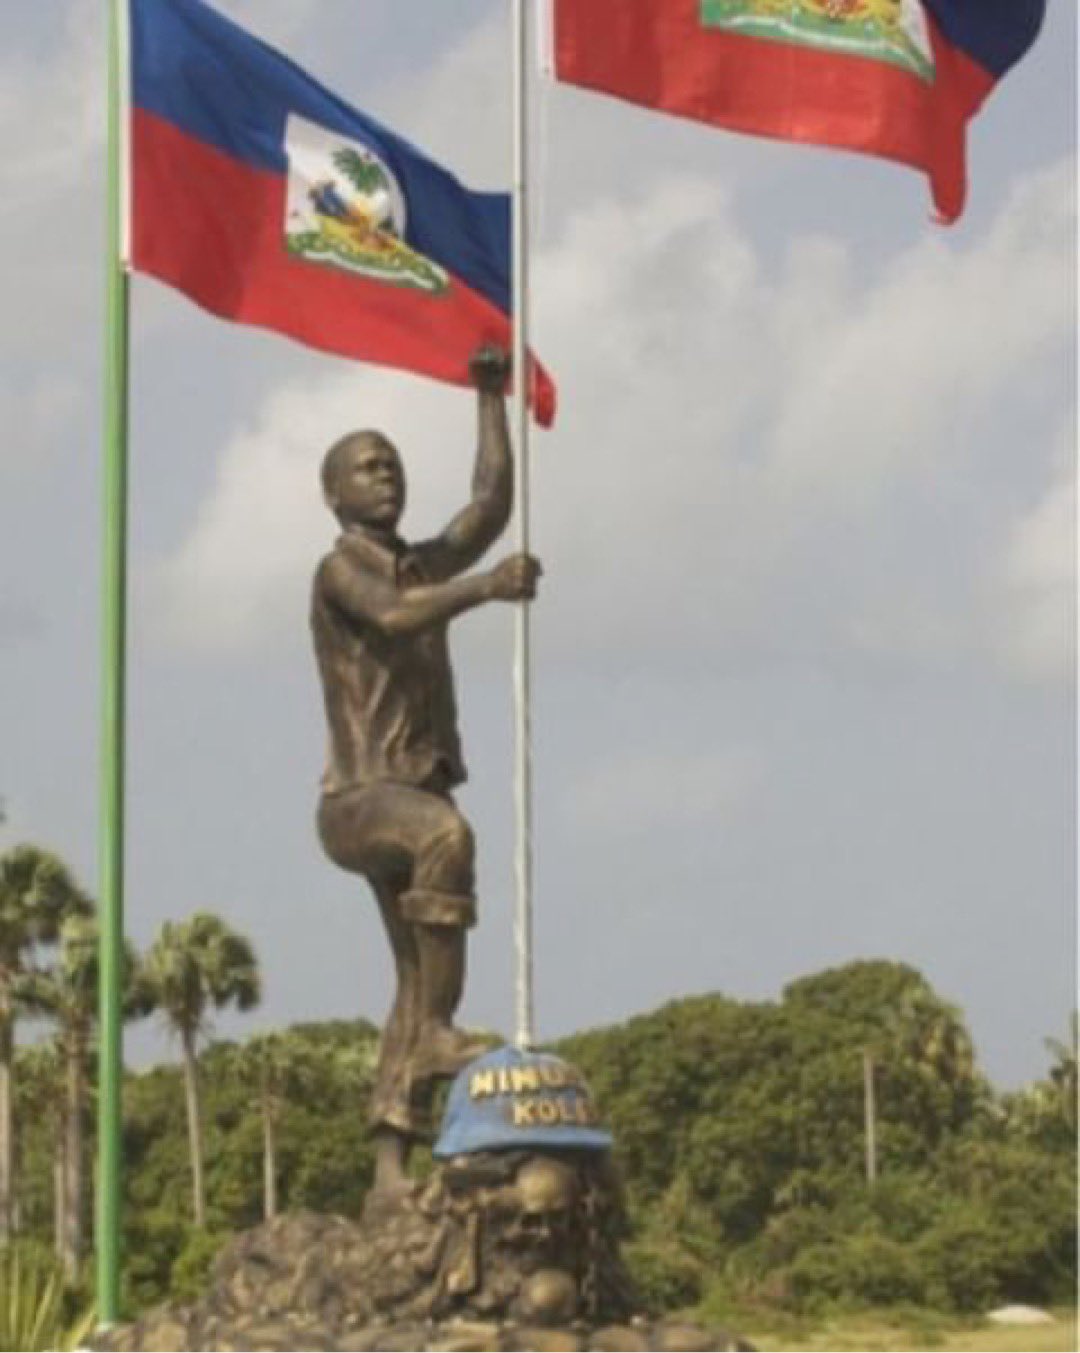 A statue in Port Salut, Haiti of a Haitian man planting the Haitian flag in a MINUSTAH helmet emblazoned with the words "MINUSTAH, Kolera."